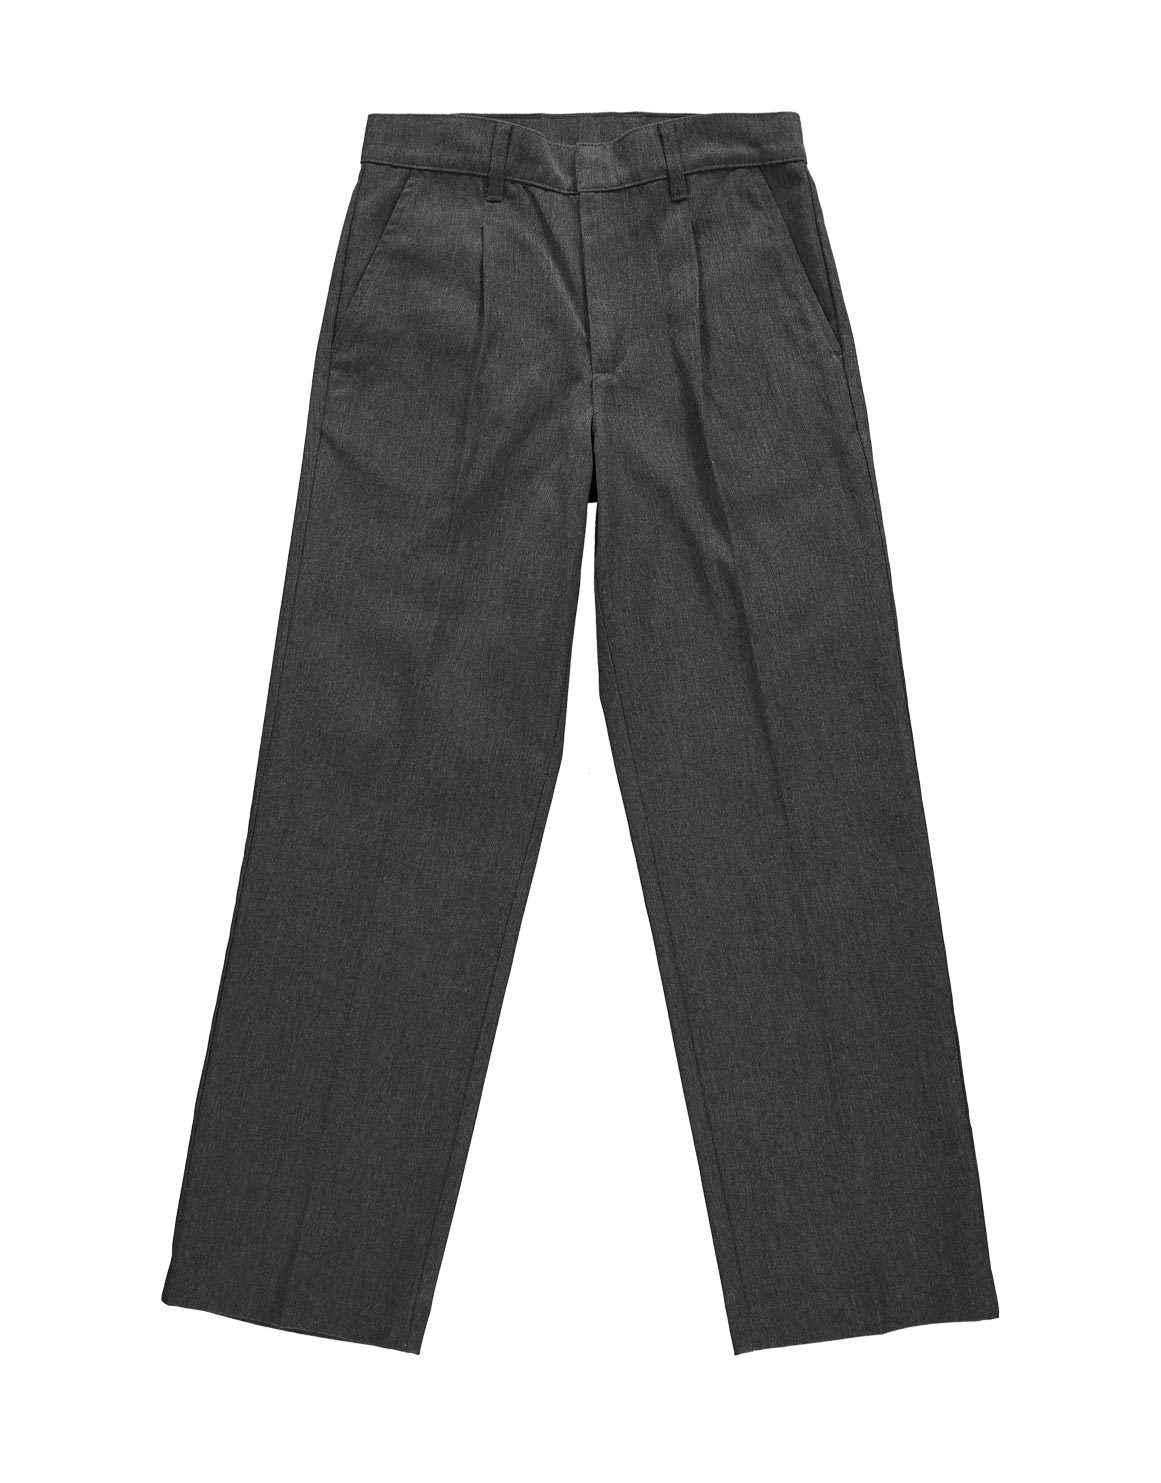 Boys Grey School Trousers | Woolworths.co.za